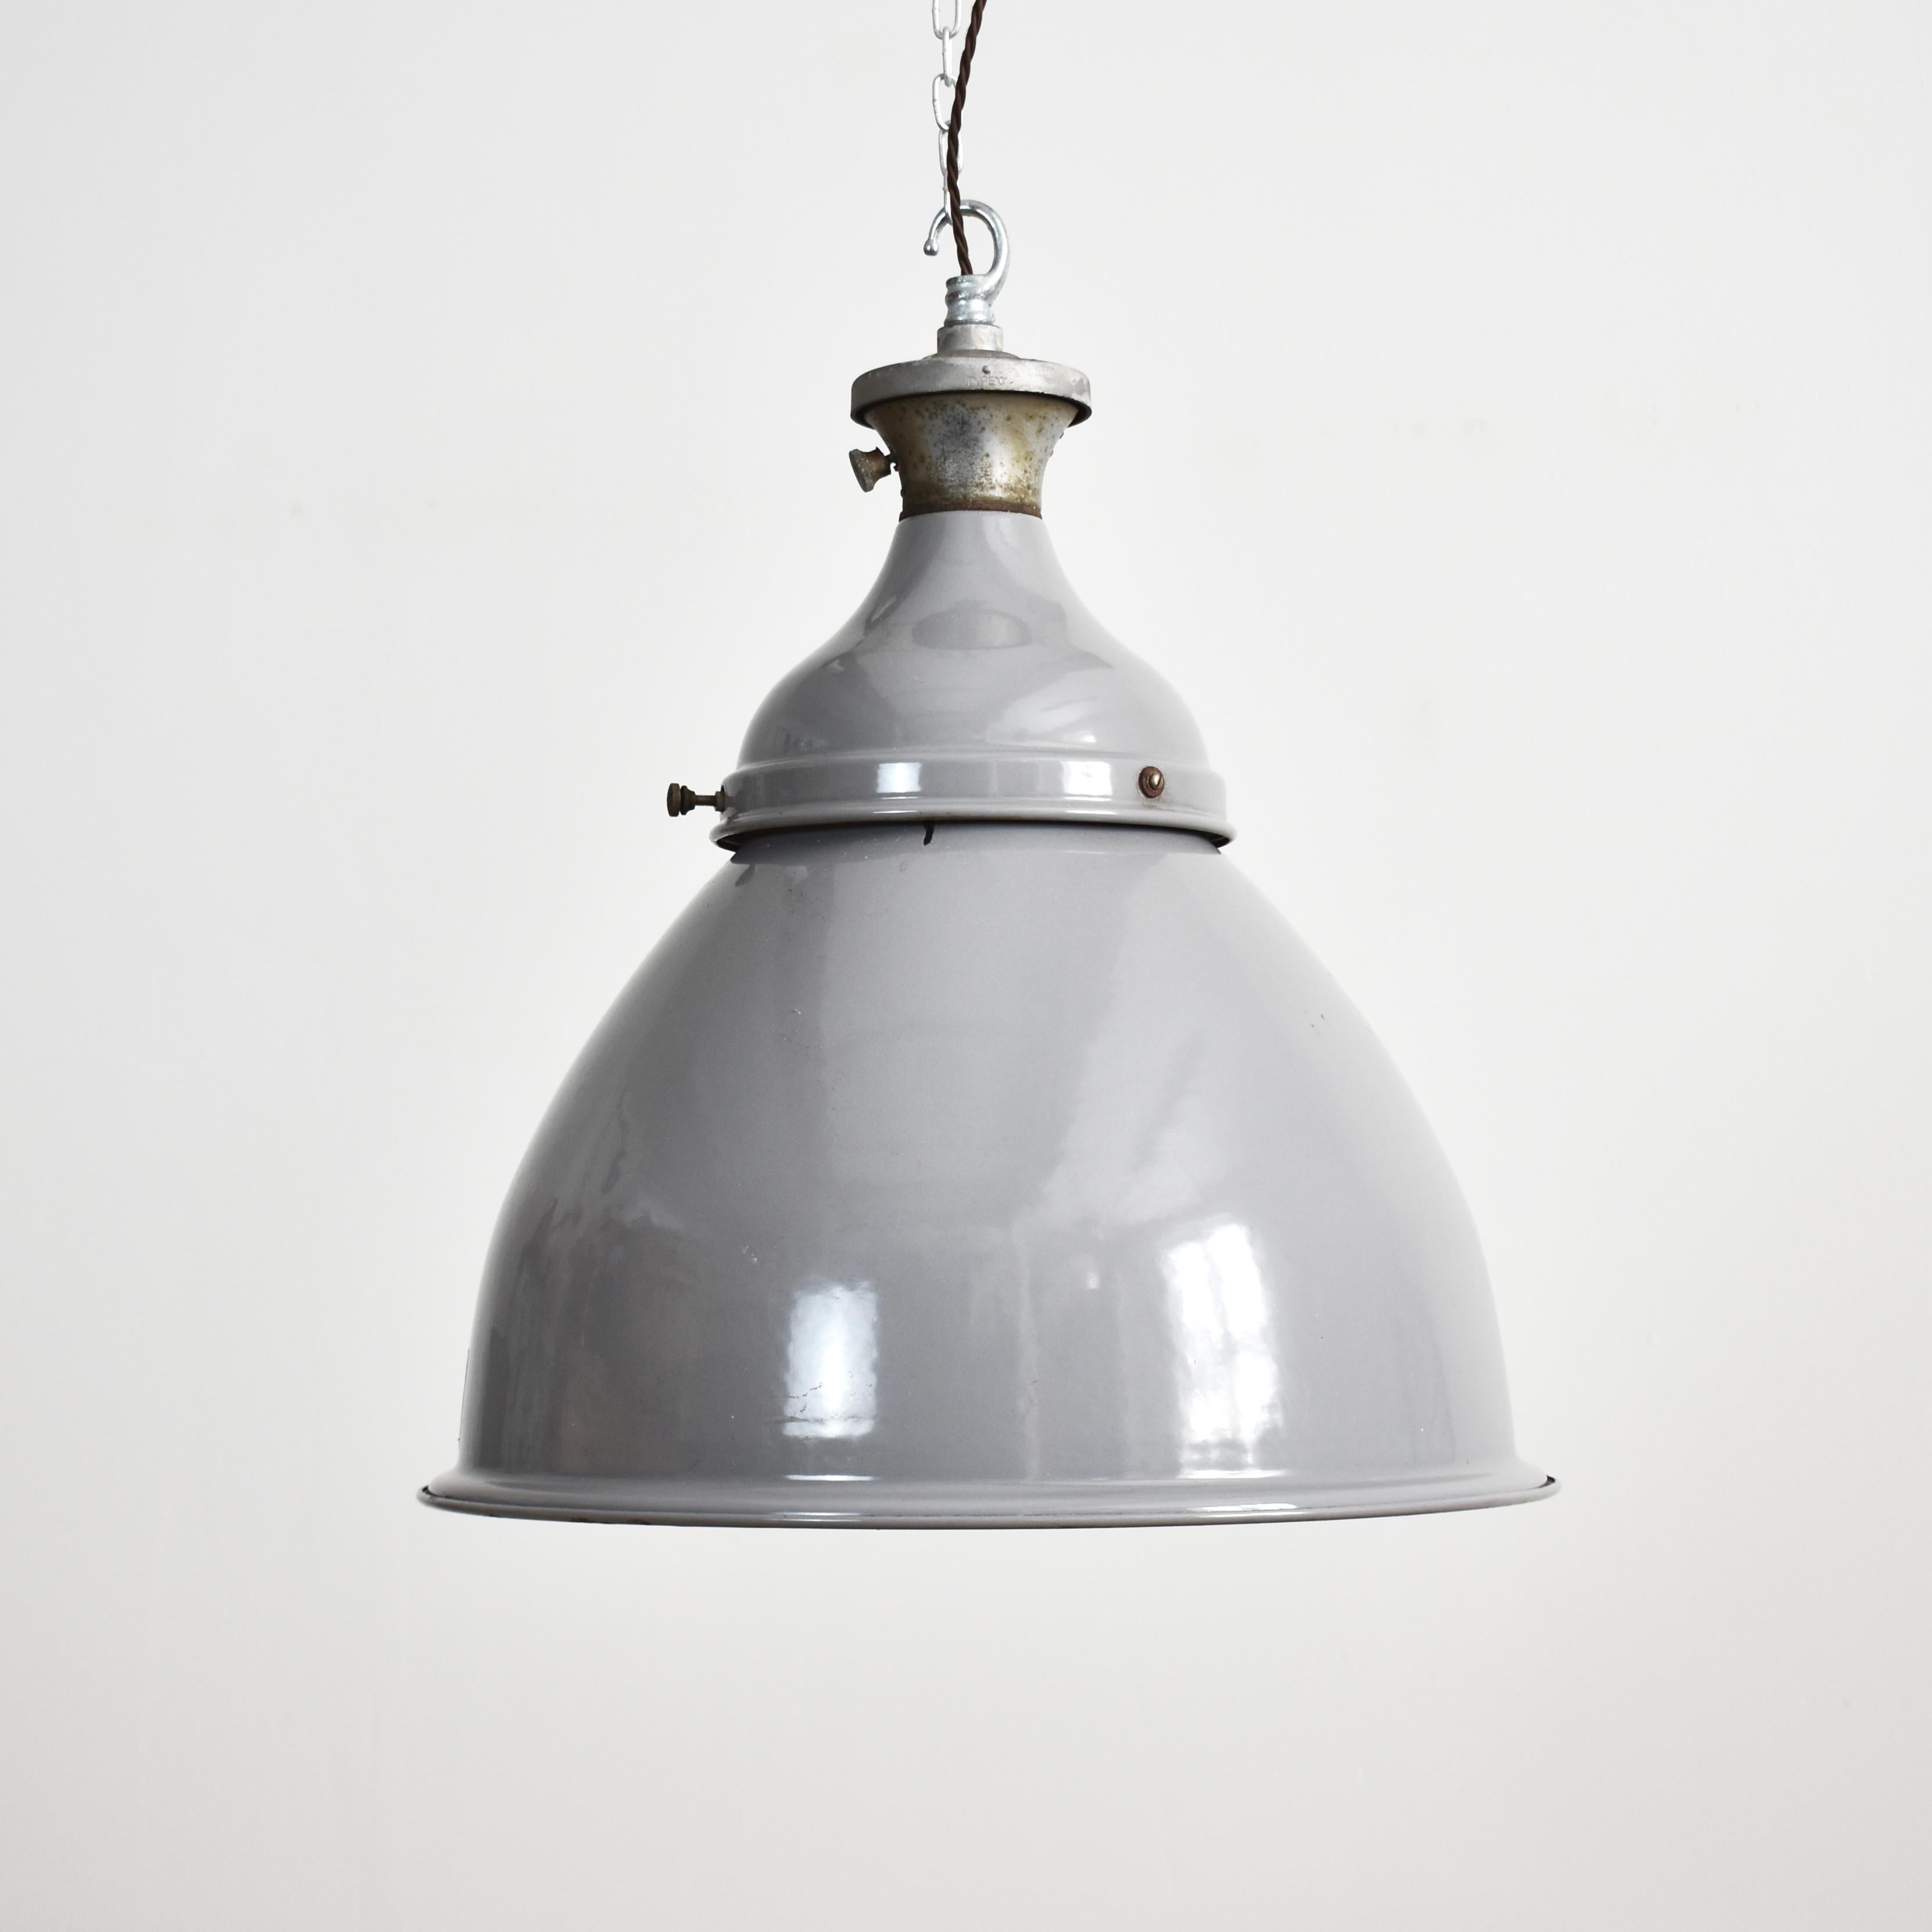 Antique Benjamin Grey Dome Industrial Pendant Light In Good Condition For Sale In Stockbridge, GB